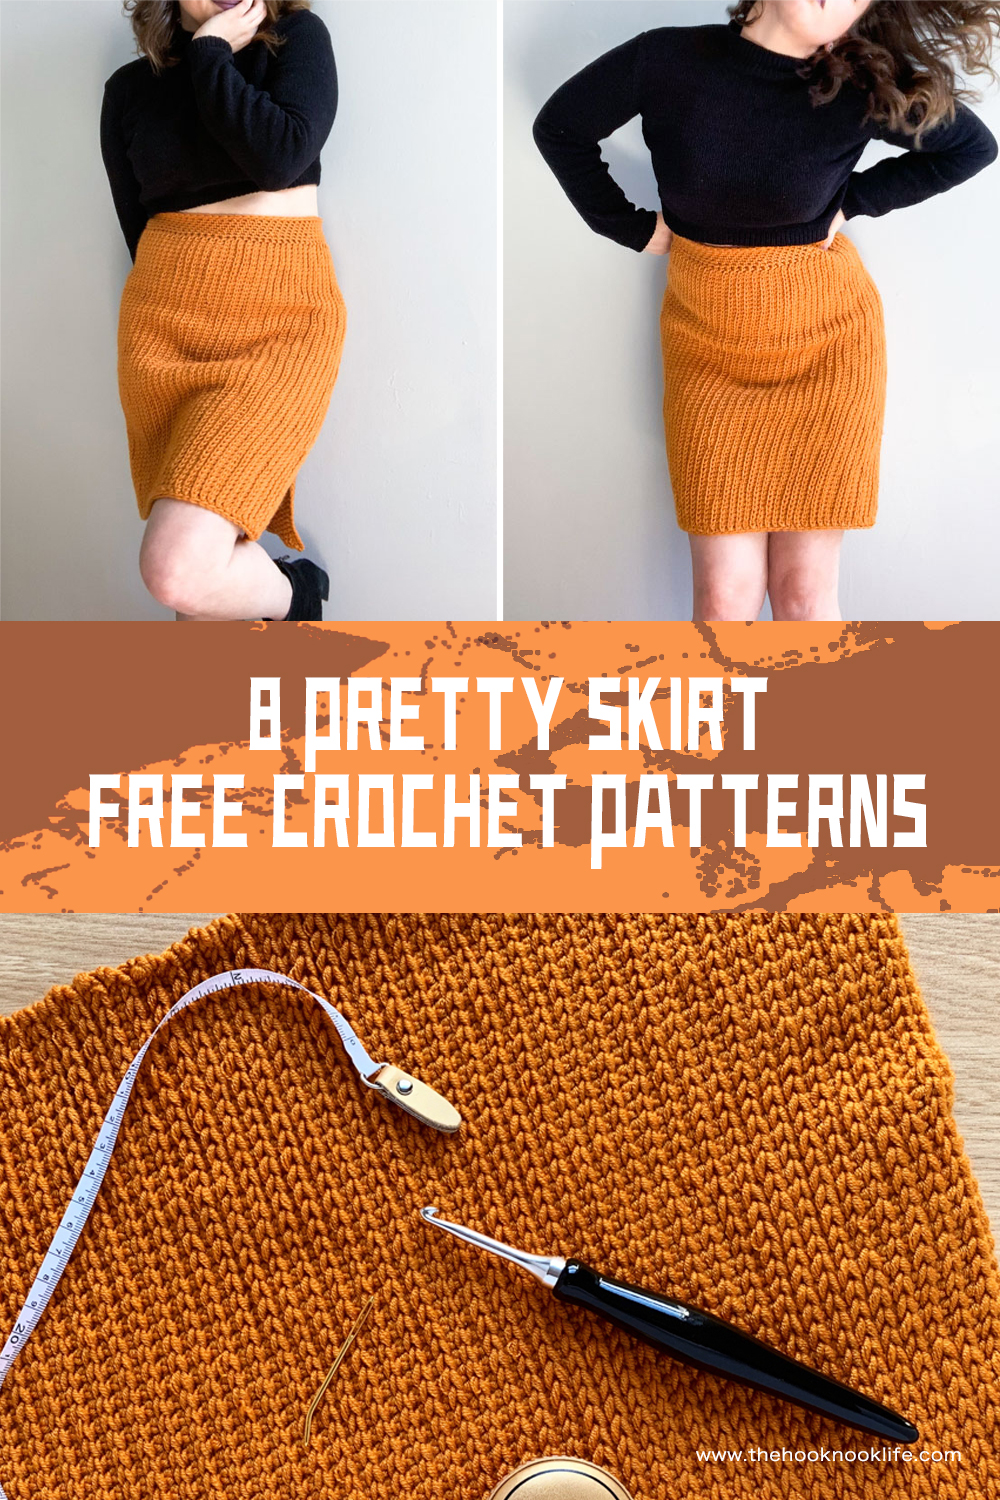 8 FREE Pretty Skirt Crochet Patterns